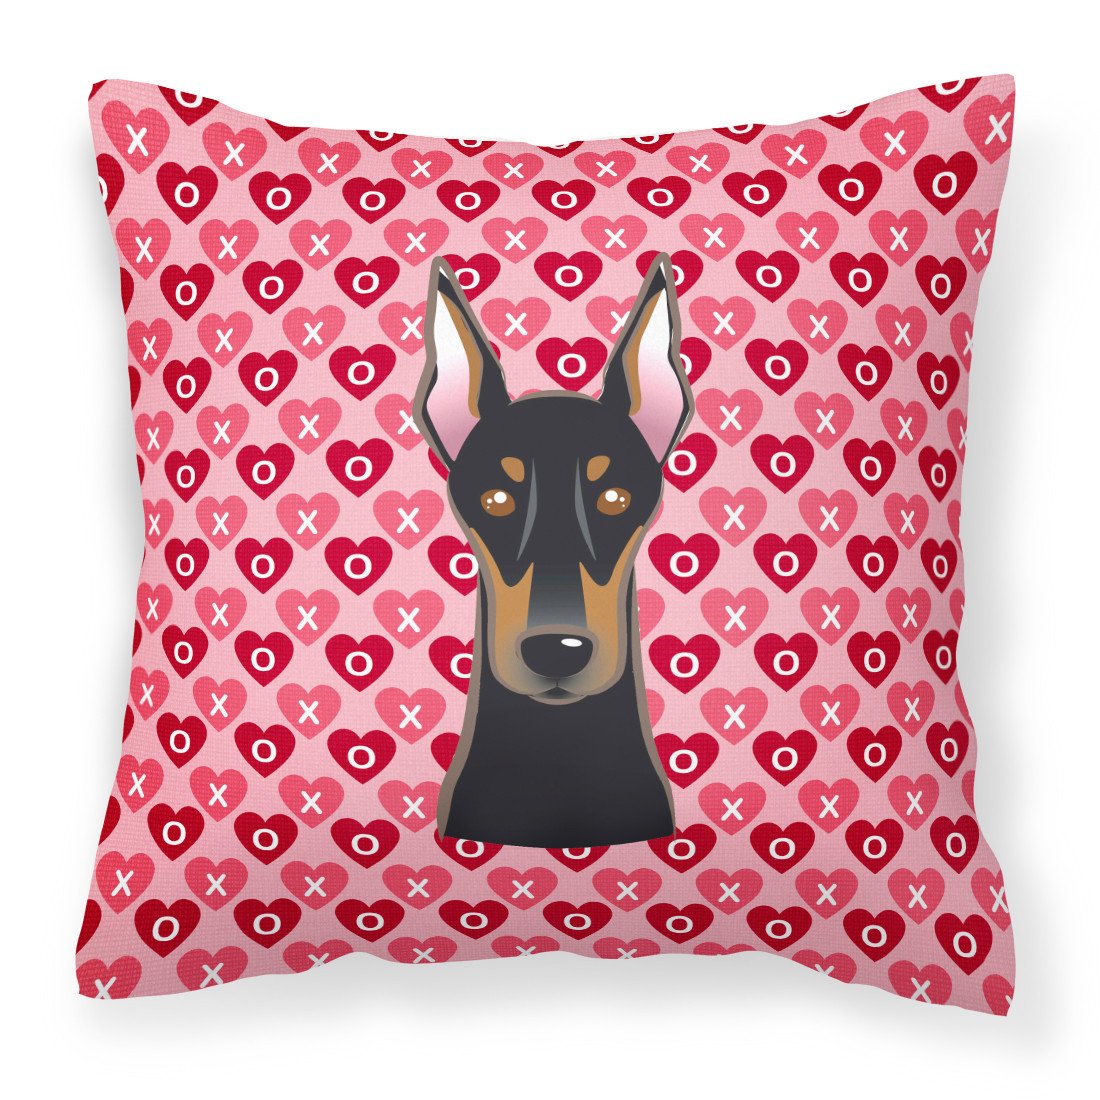 Doberman Pinscher Hearts Fabric Decorative Pillow BB5315PW1818 by Caroline's Treasures